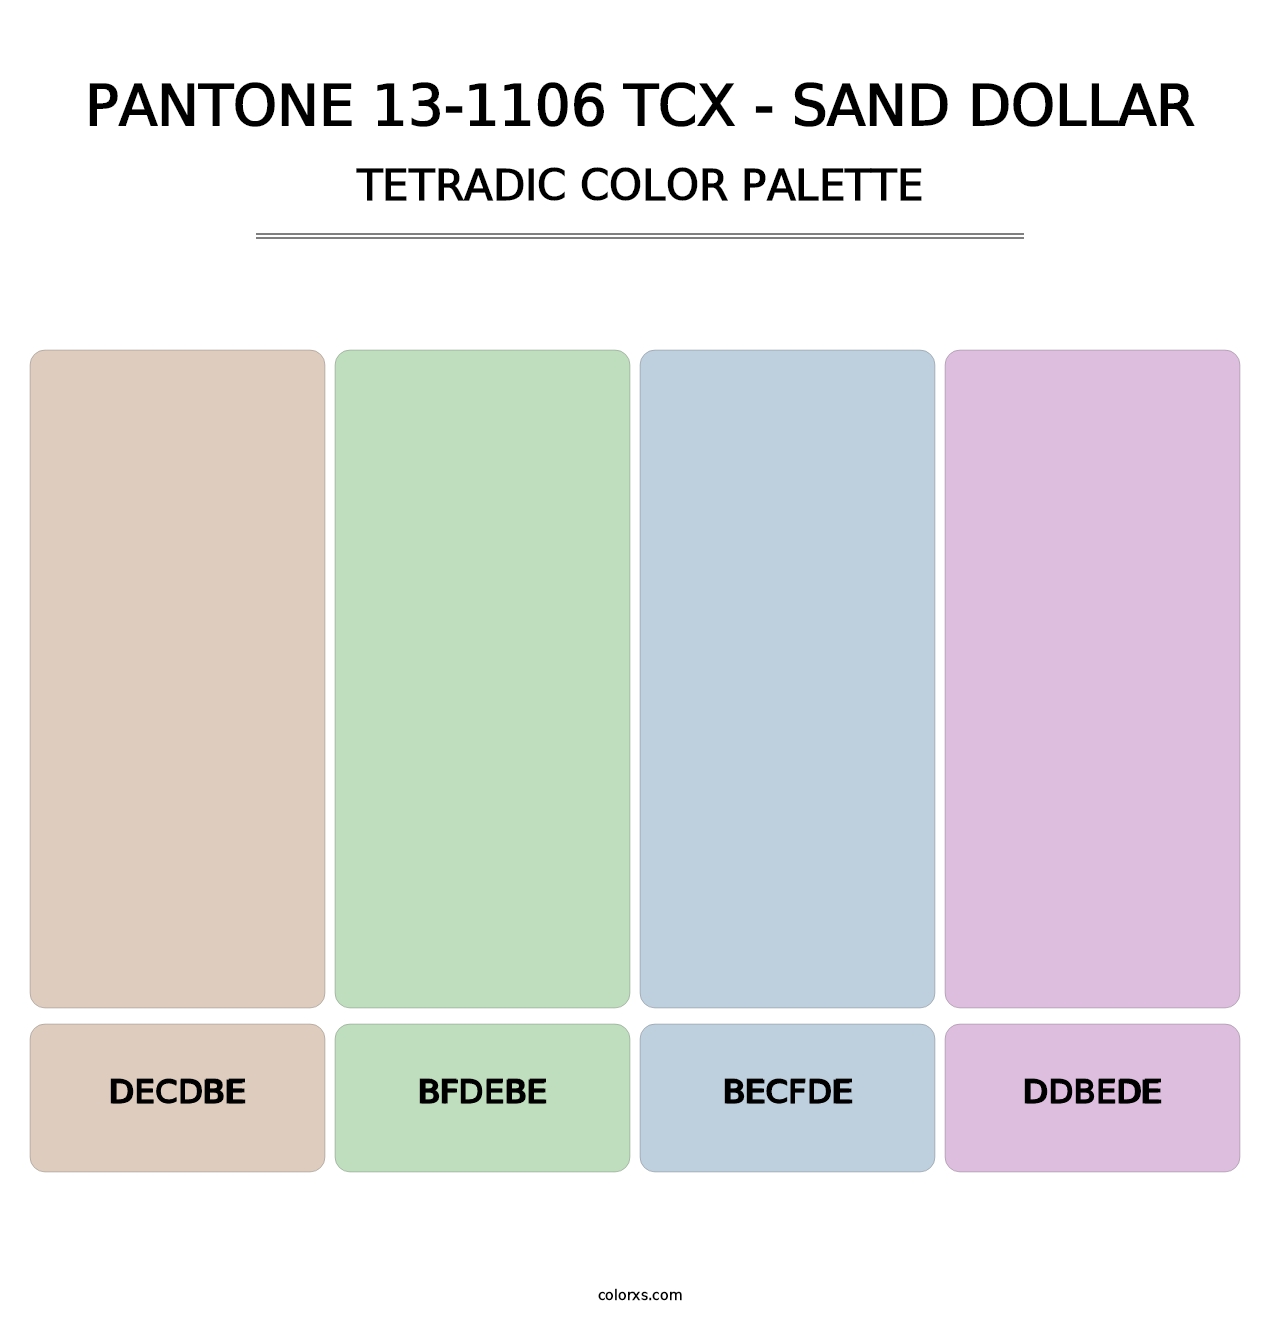 PANTONE 13-1106 TCX - Sand Dollar - Tetradic Color Palette